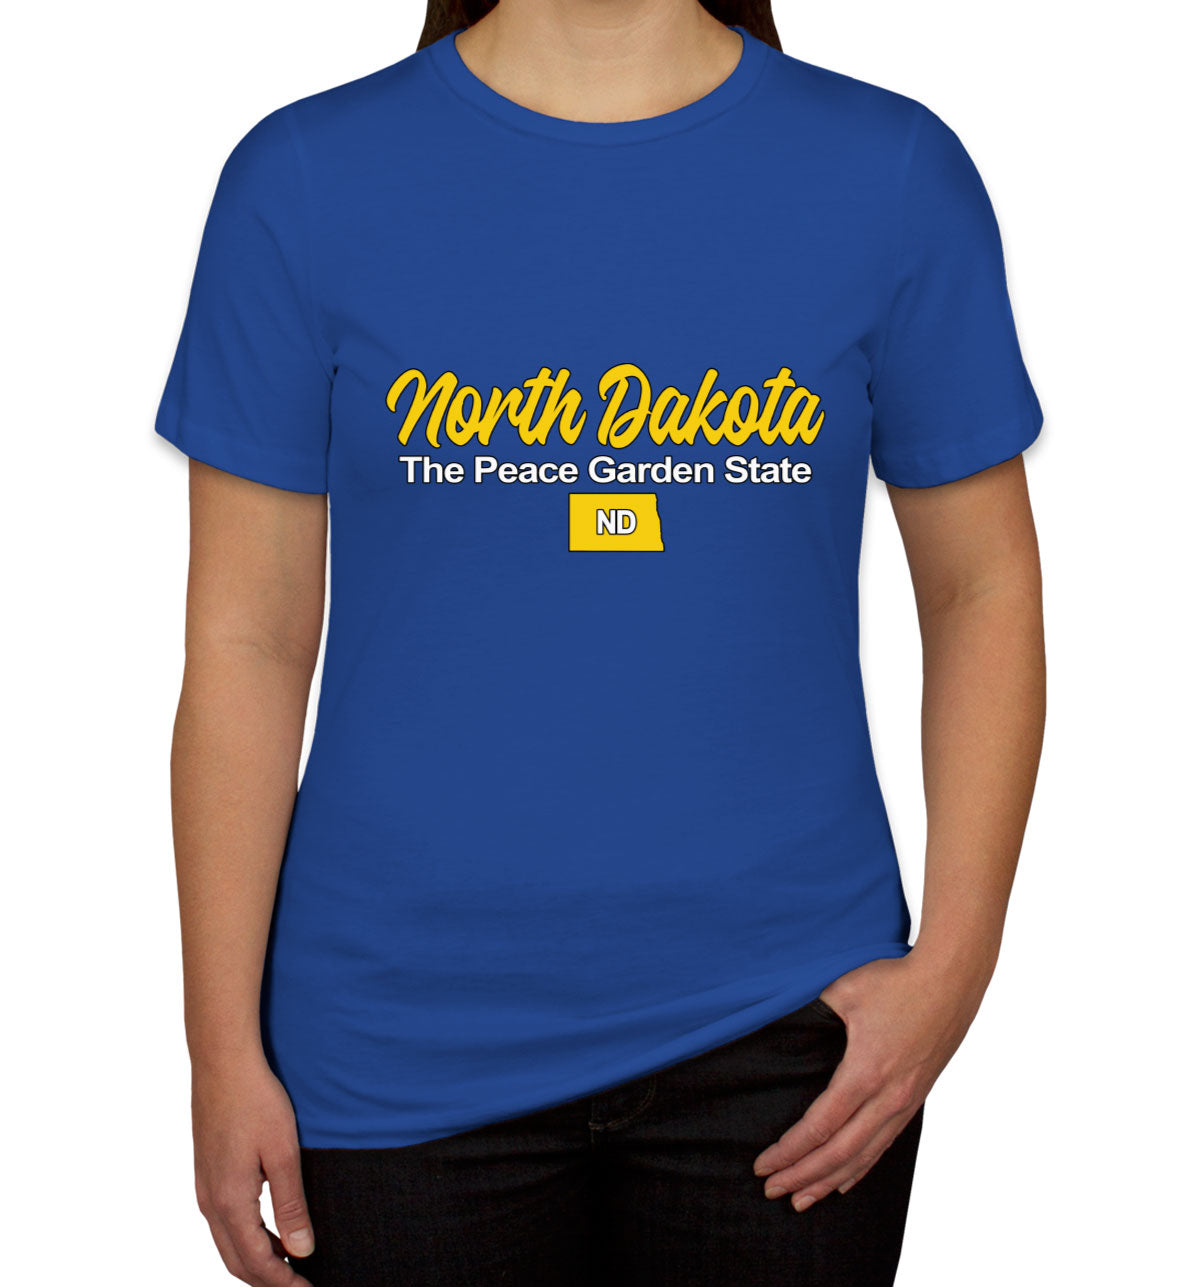 North Dakota The Peace Garden State Women's T-shirt